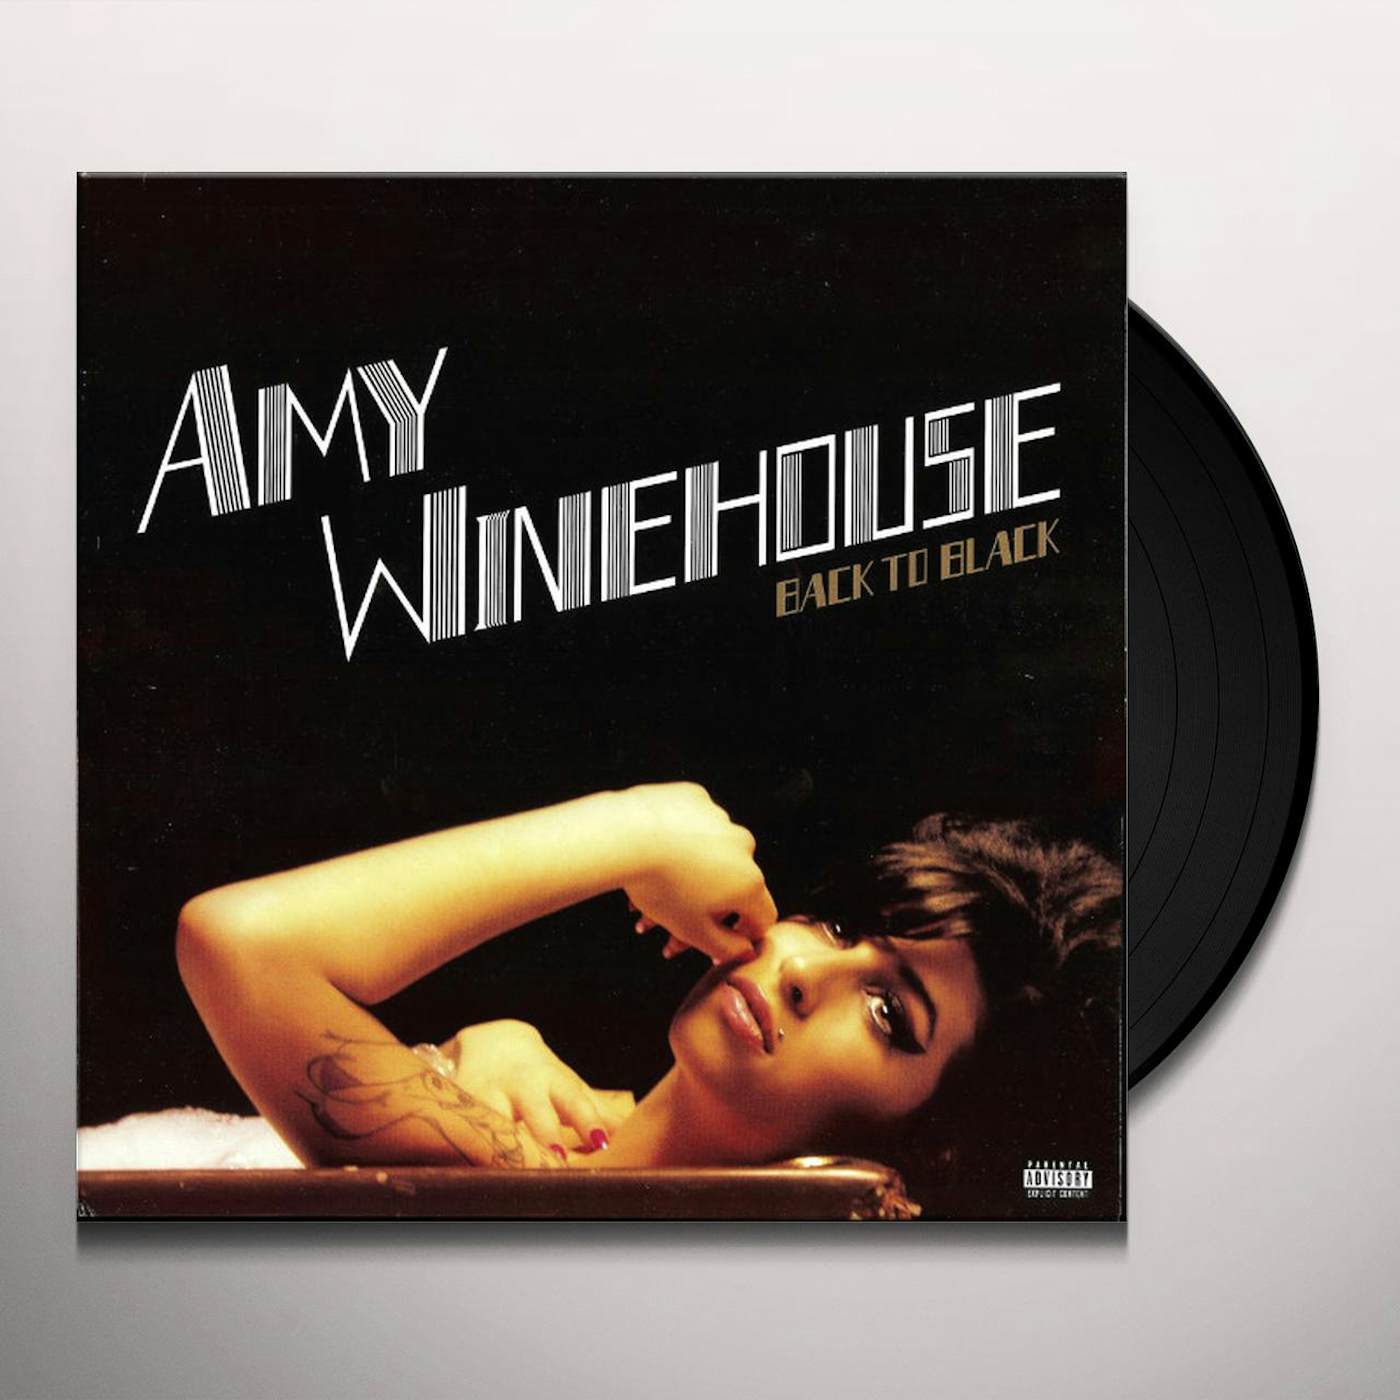 Amy Winehouse Back To Black Slipmat - Amy Winehouse